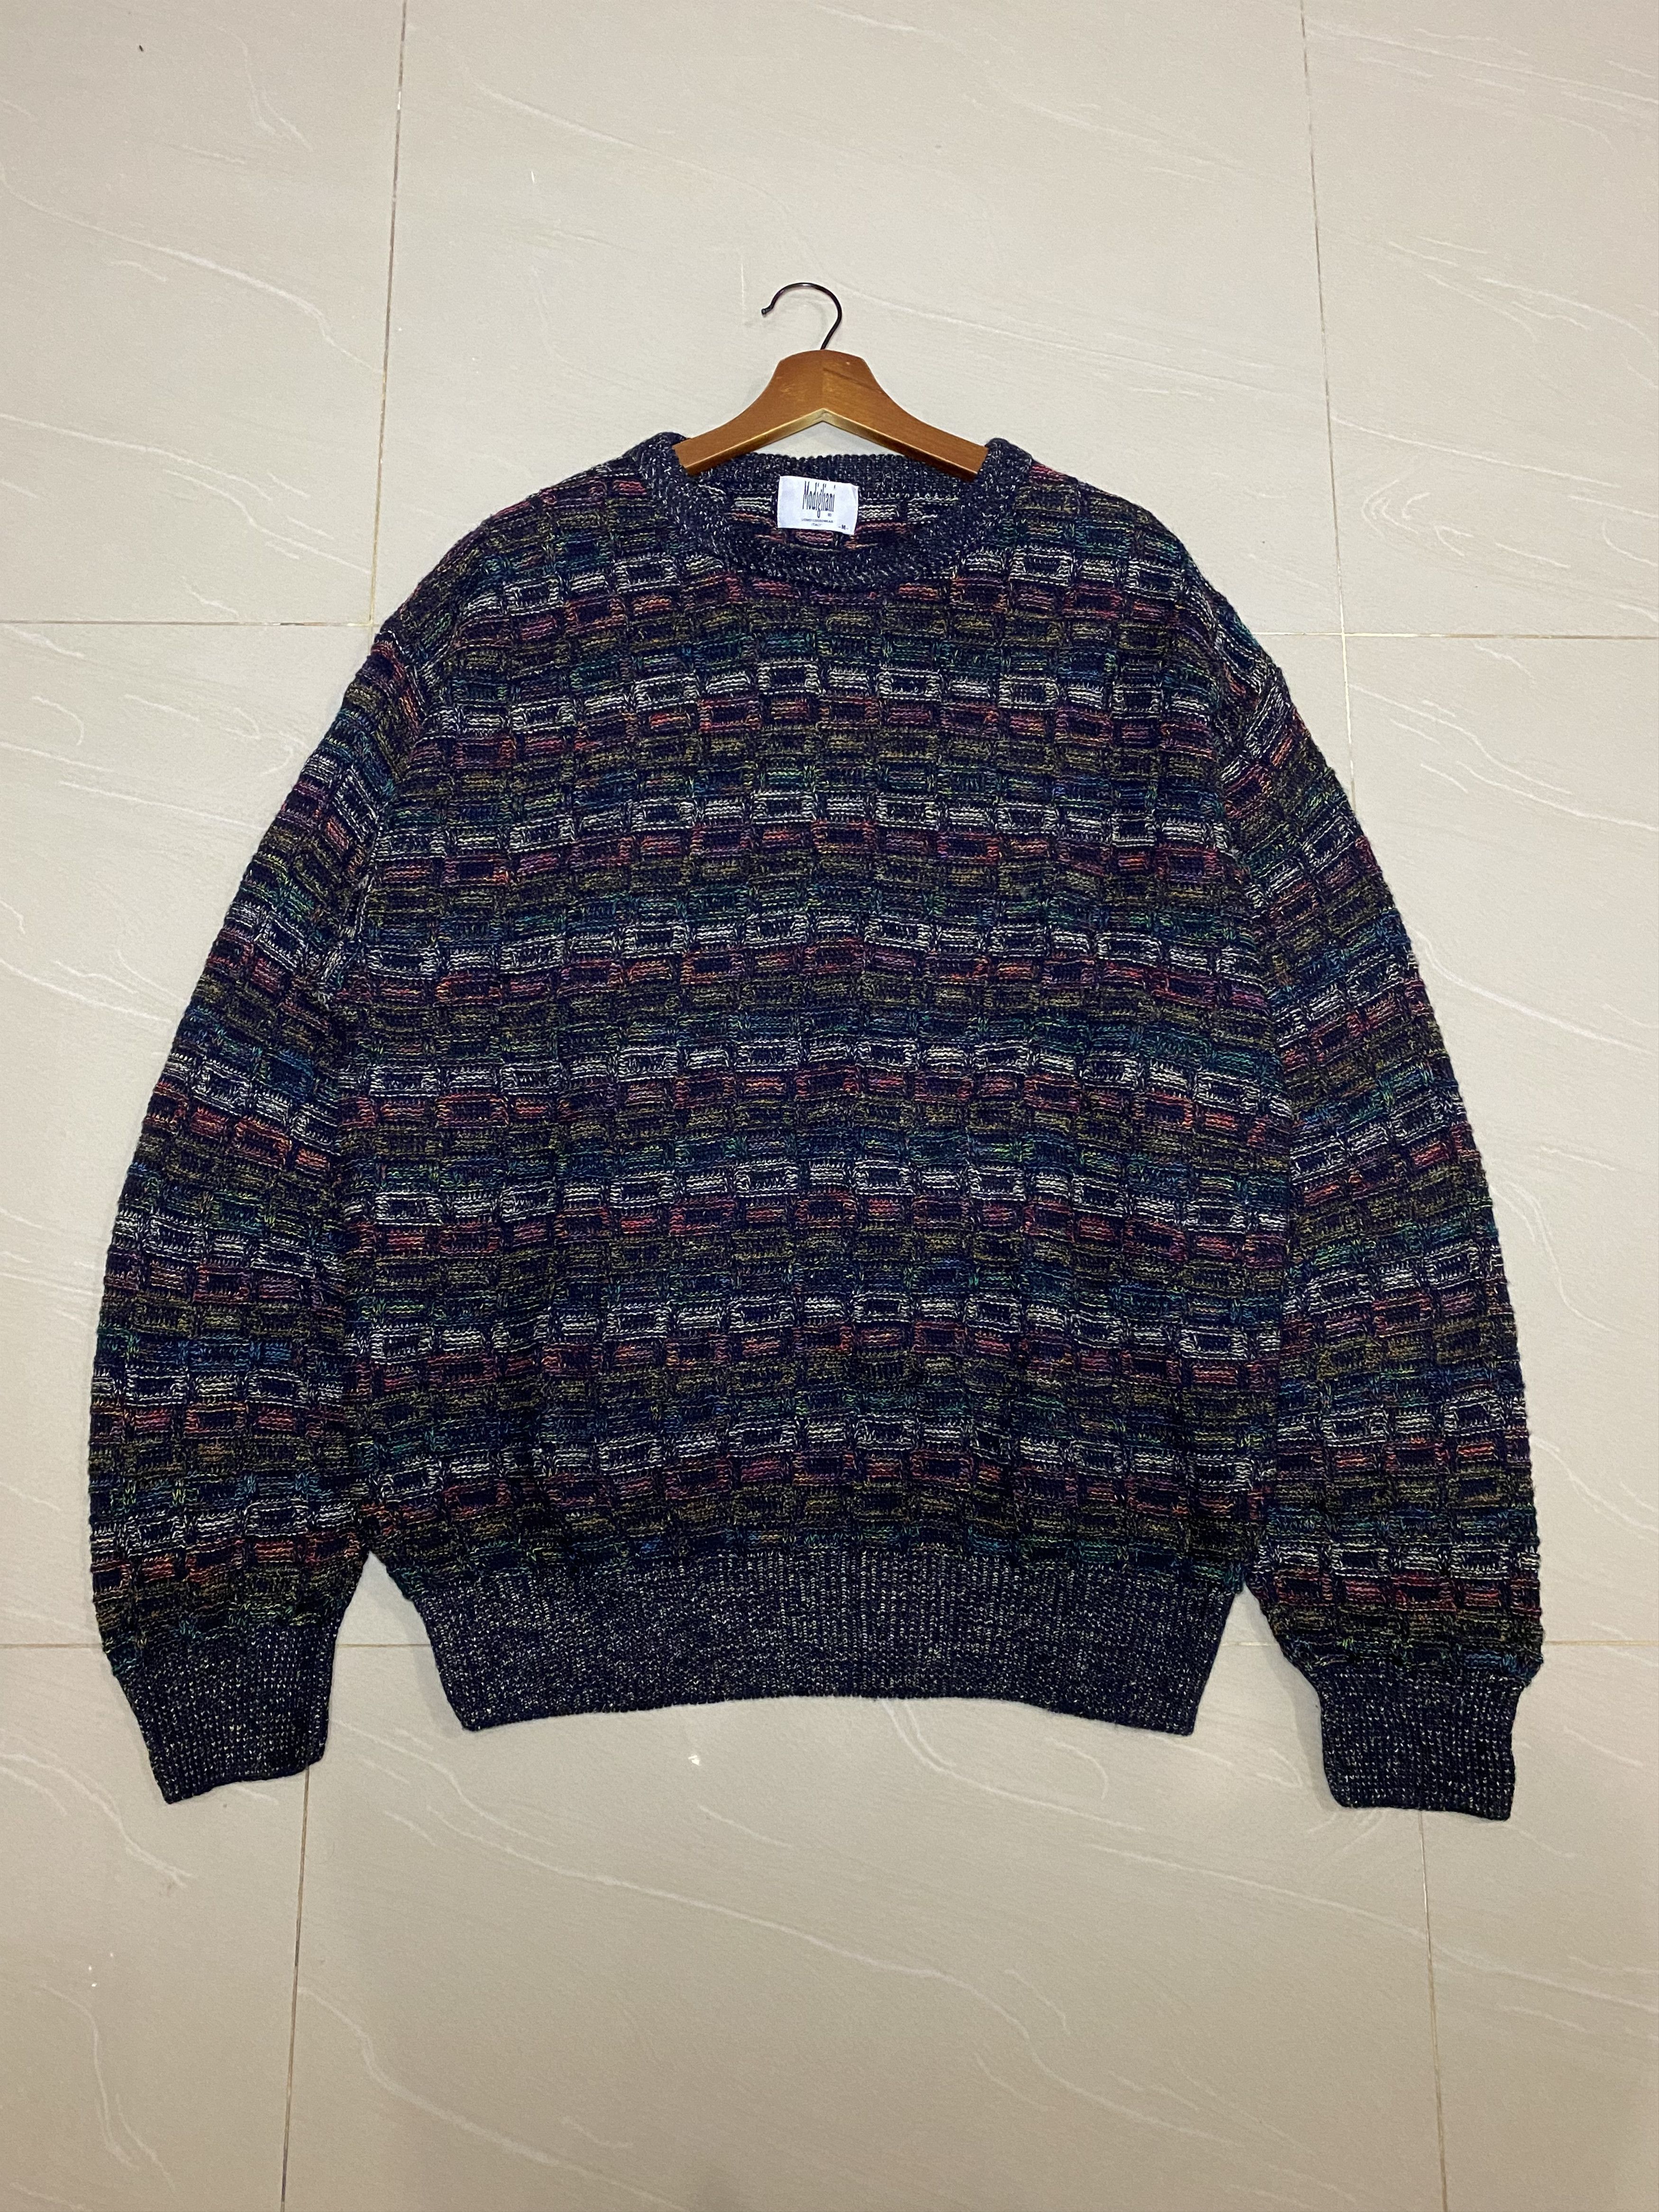 Italian Designers Modigliani Uomo Coordwear Italy Knit Wear Sweatshirt ...